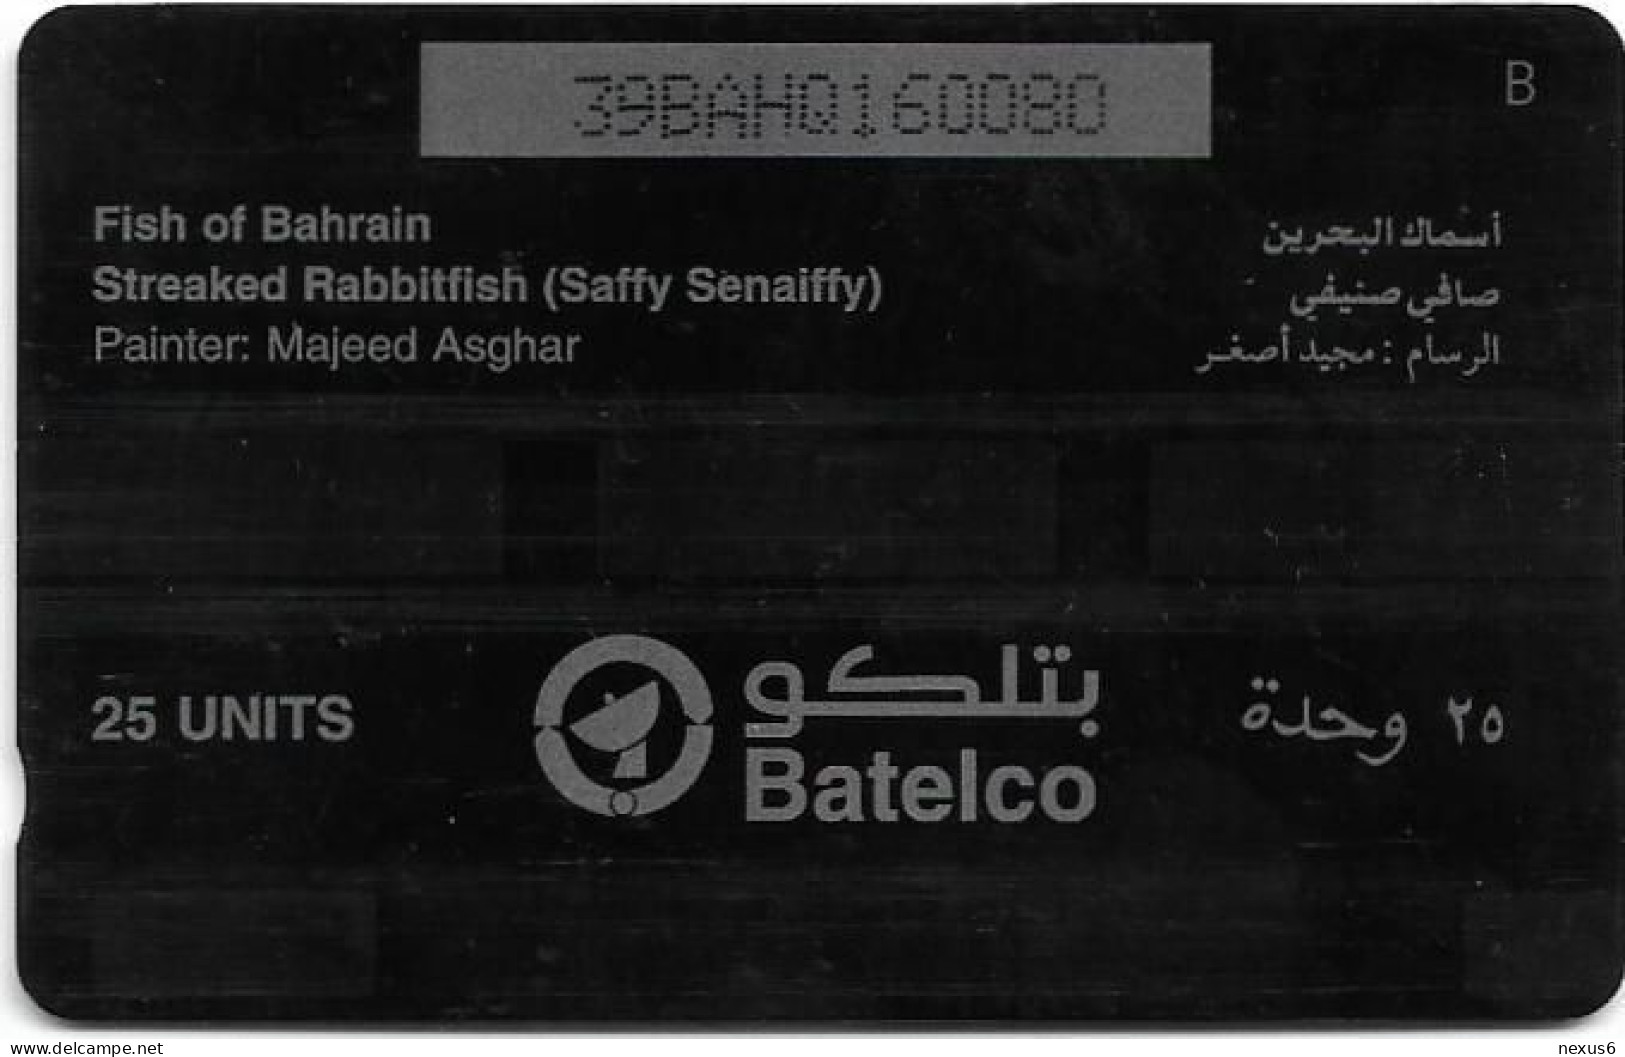 Bahrain - Batelco (GPT) - Fish Of Bahrain - Streaked Rabbitfish - 39BAHQ (Normal 0, Flat Top ''3''), 1996, 25Units, Used - Baharain